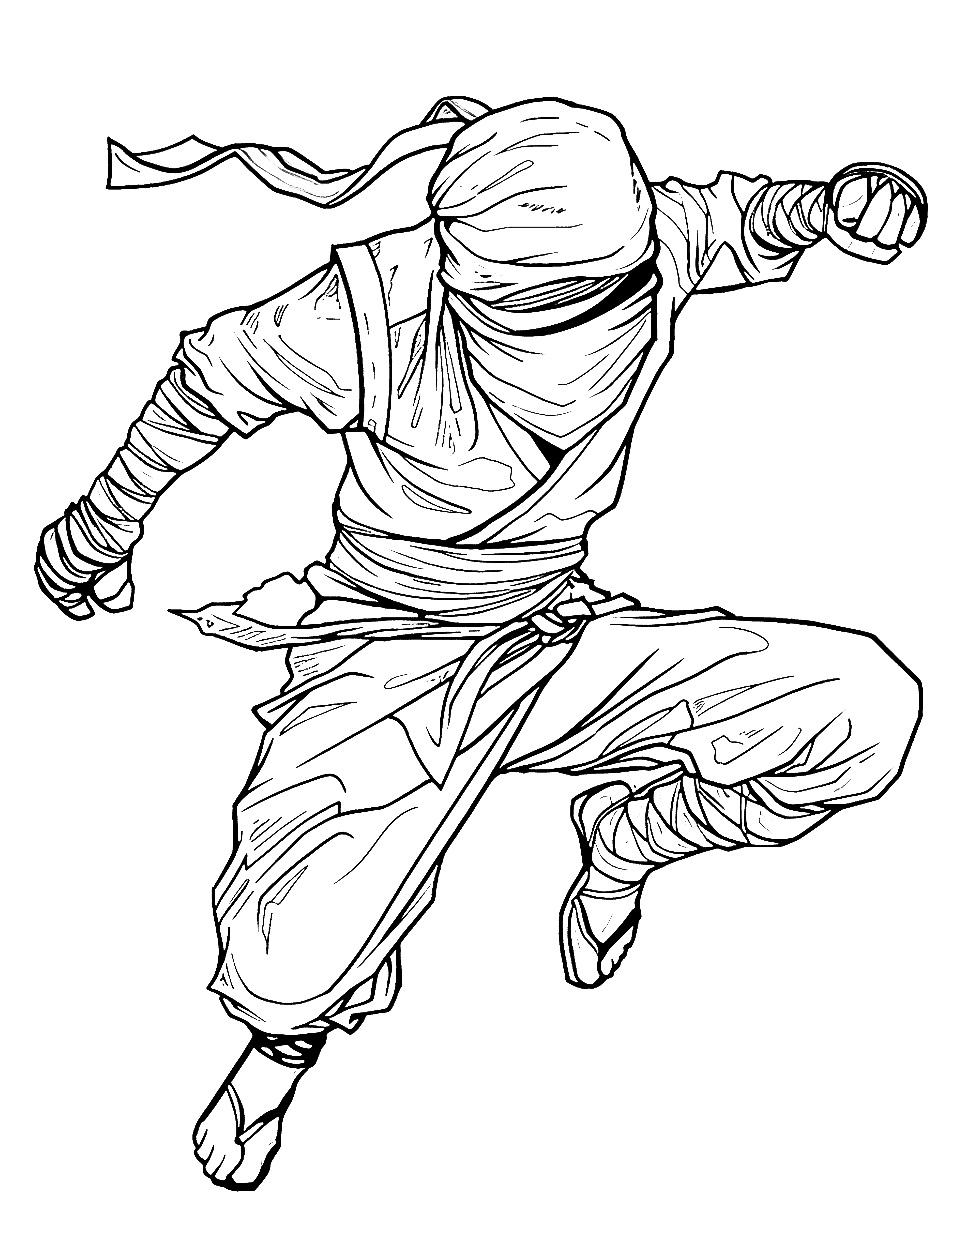 Acrobatic Ninja Flip Coloring Page - A ninja performing an acrobatic flip, showcasing agility and skill.